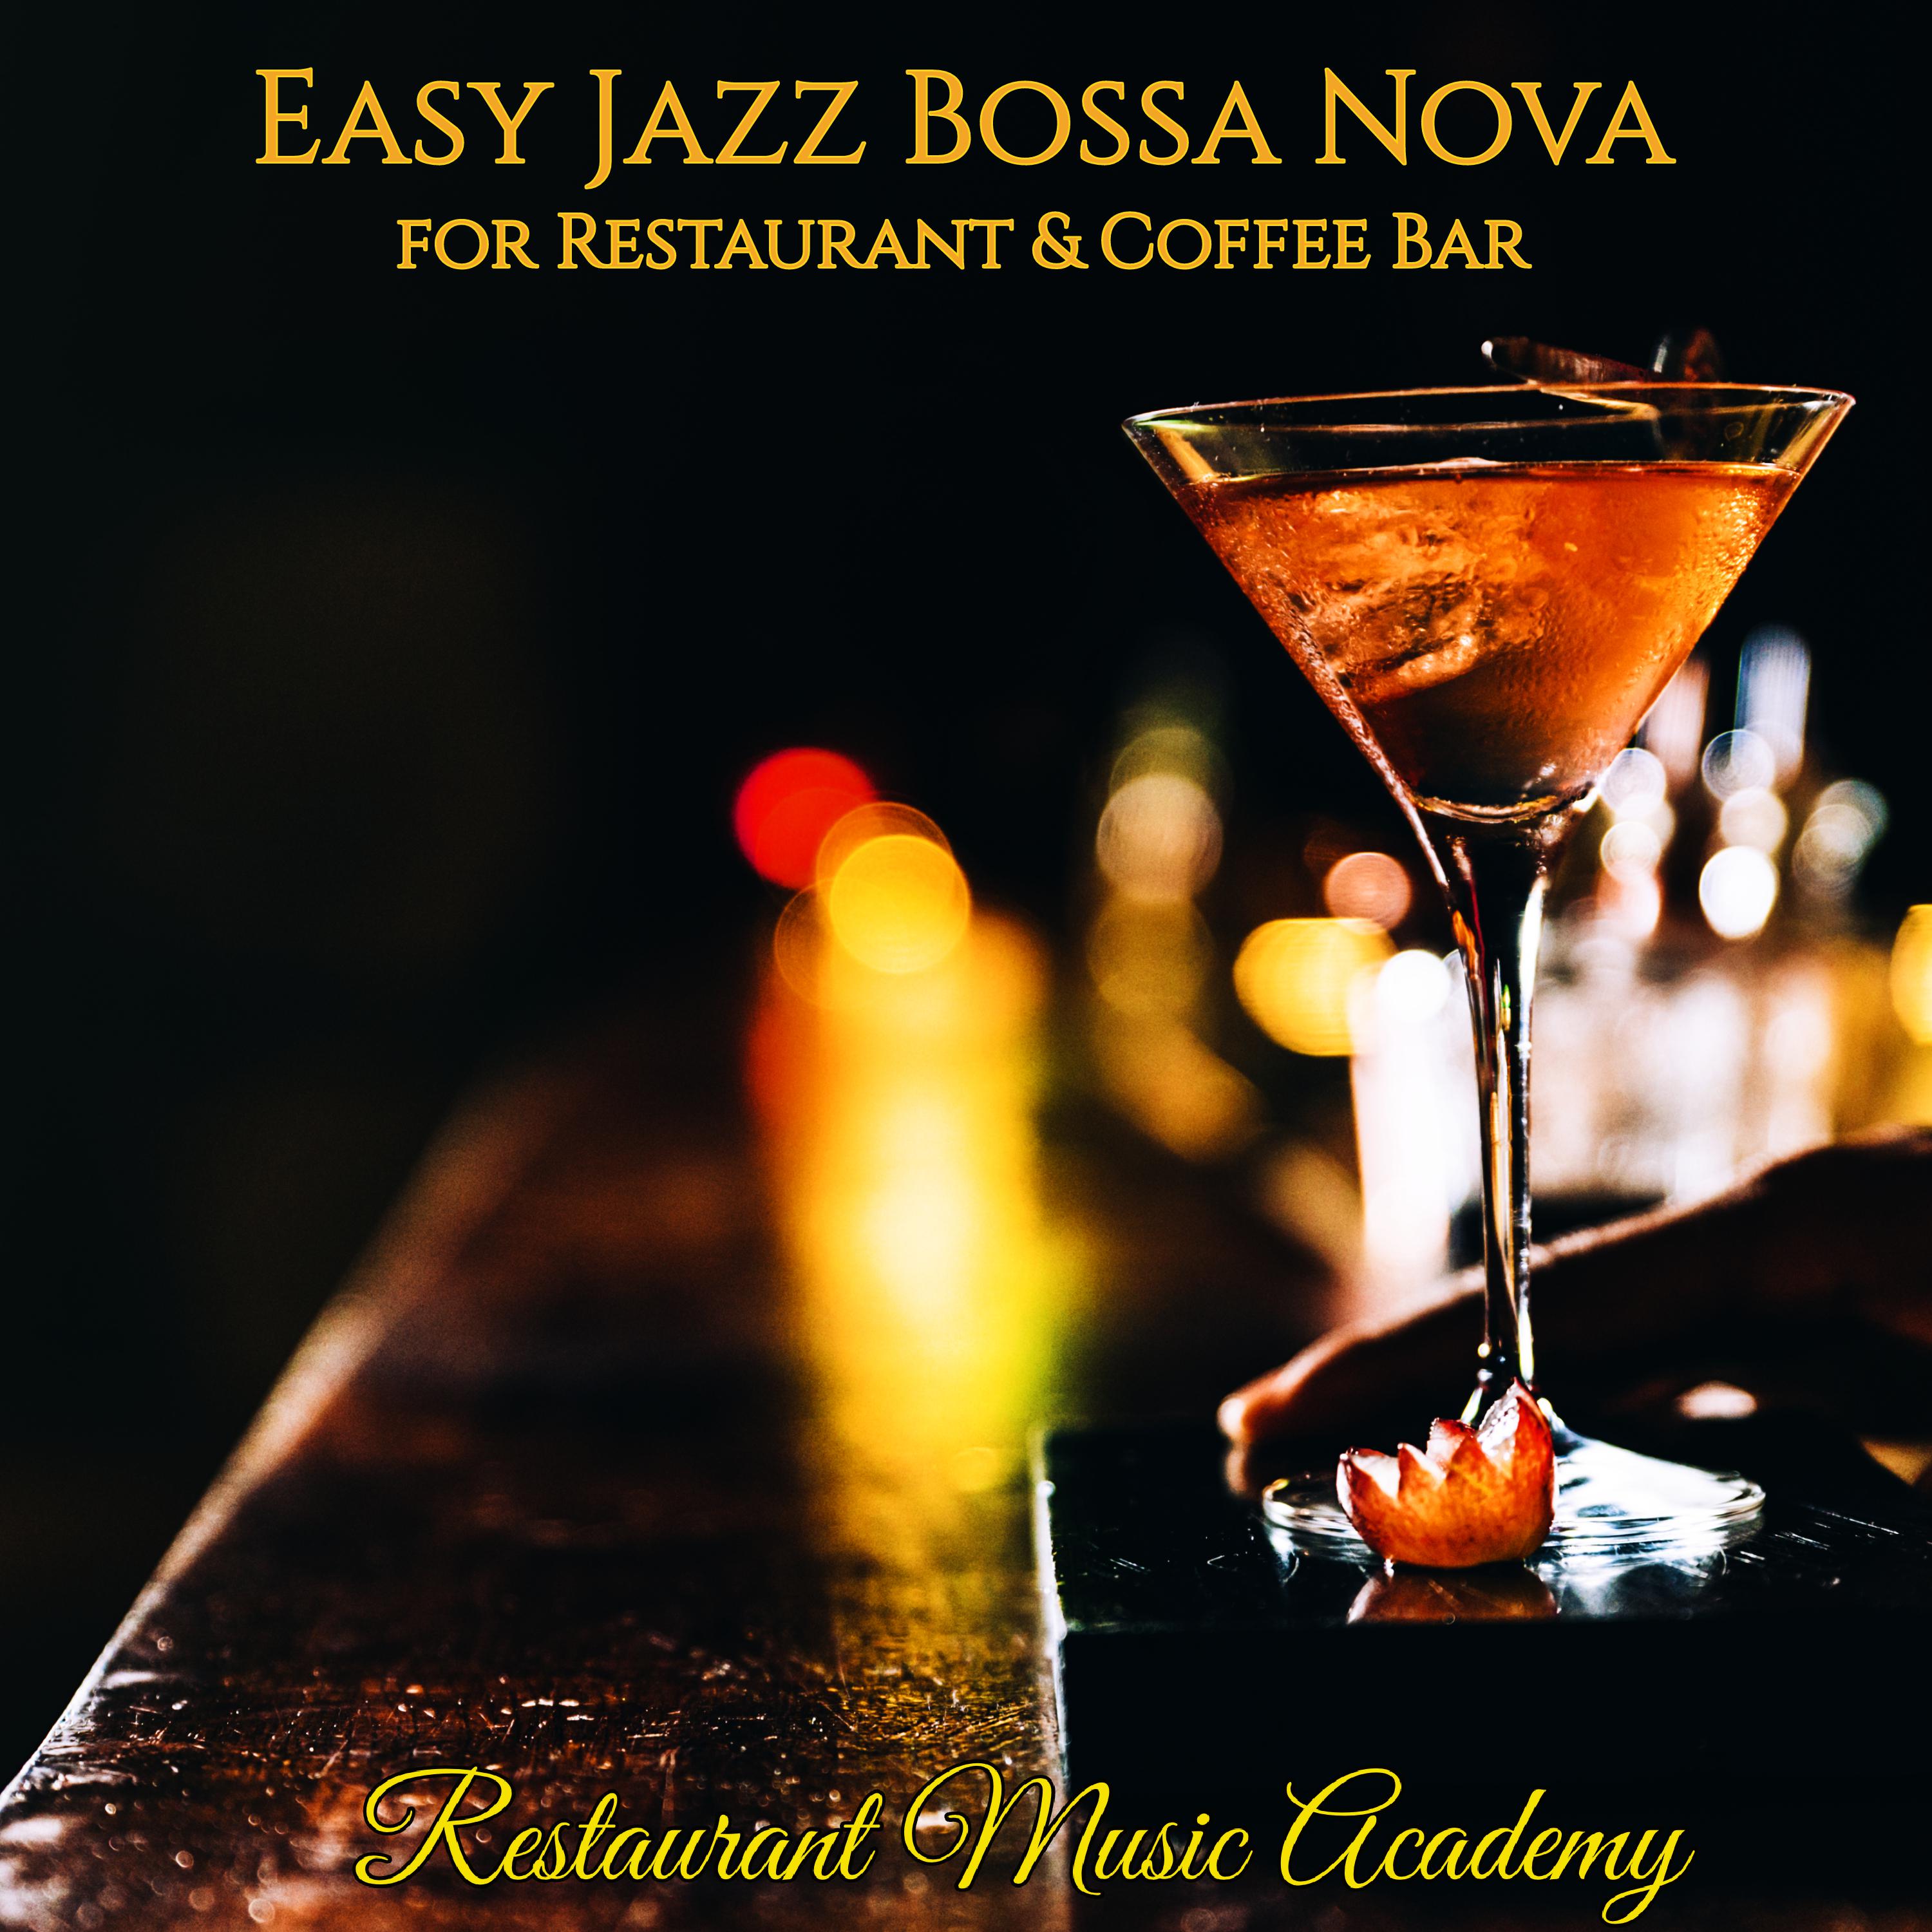 Easy Jazz Bossa Nova for Restaurant & Coffee Bar